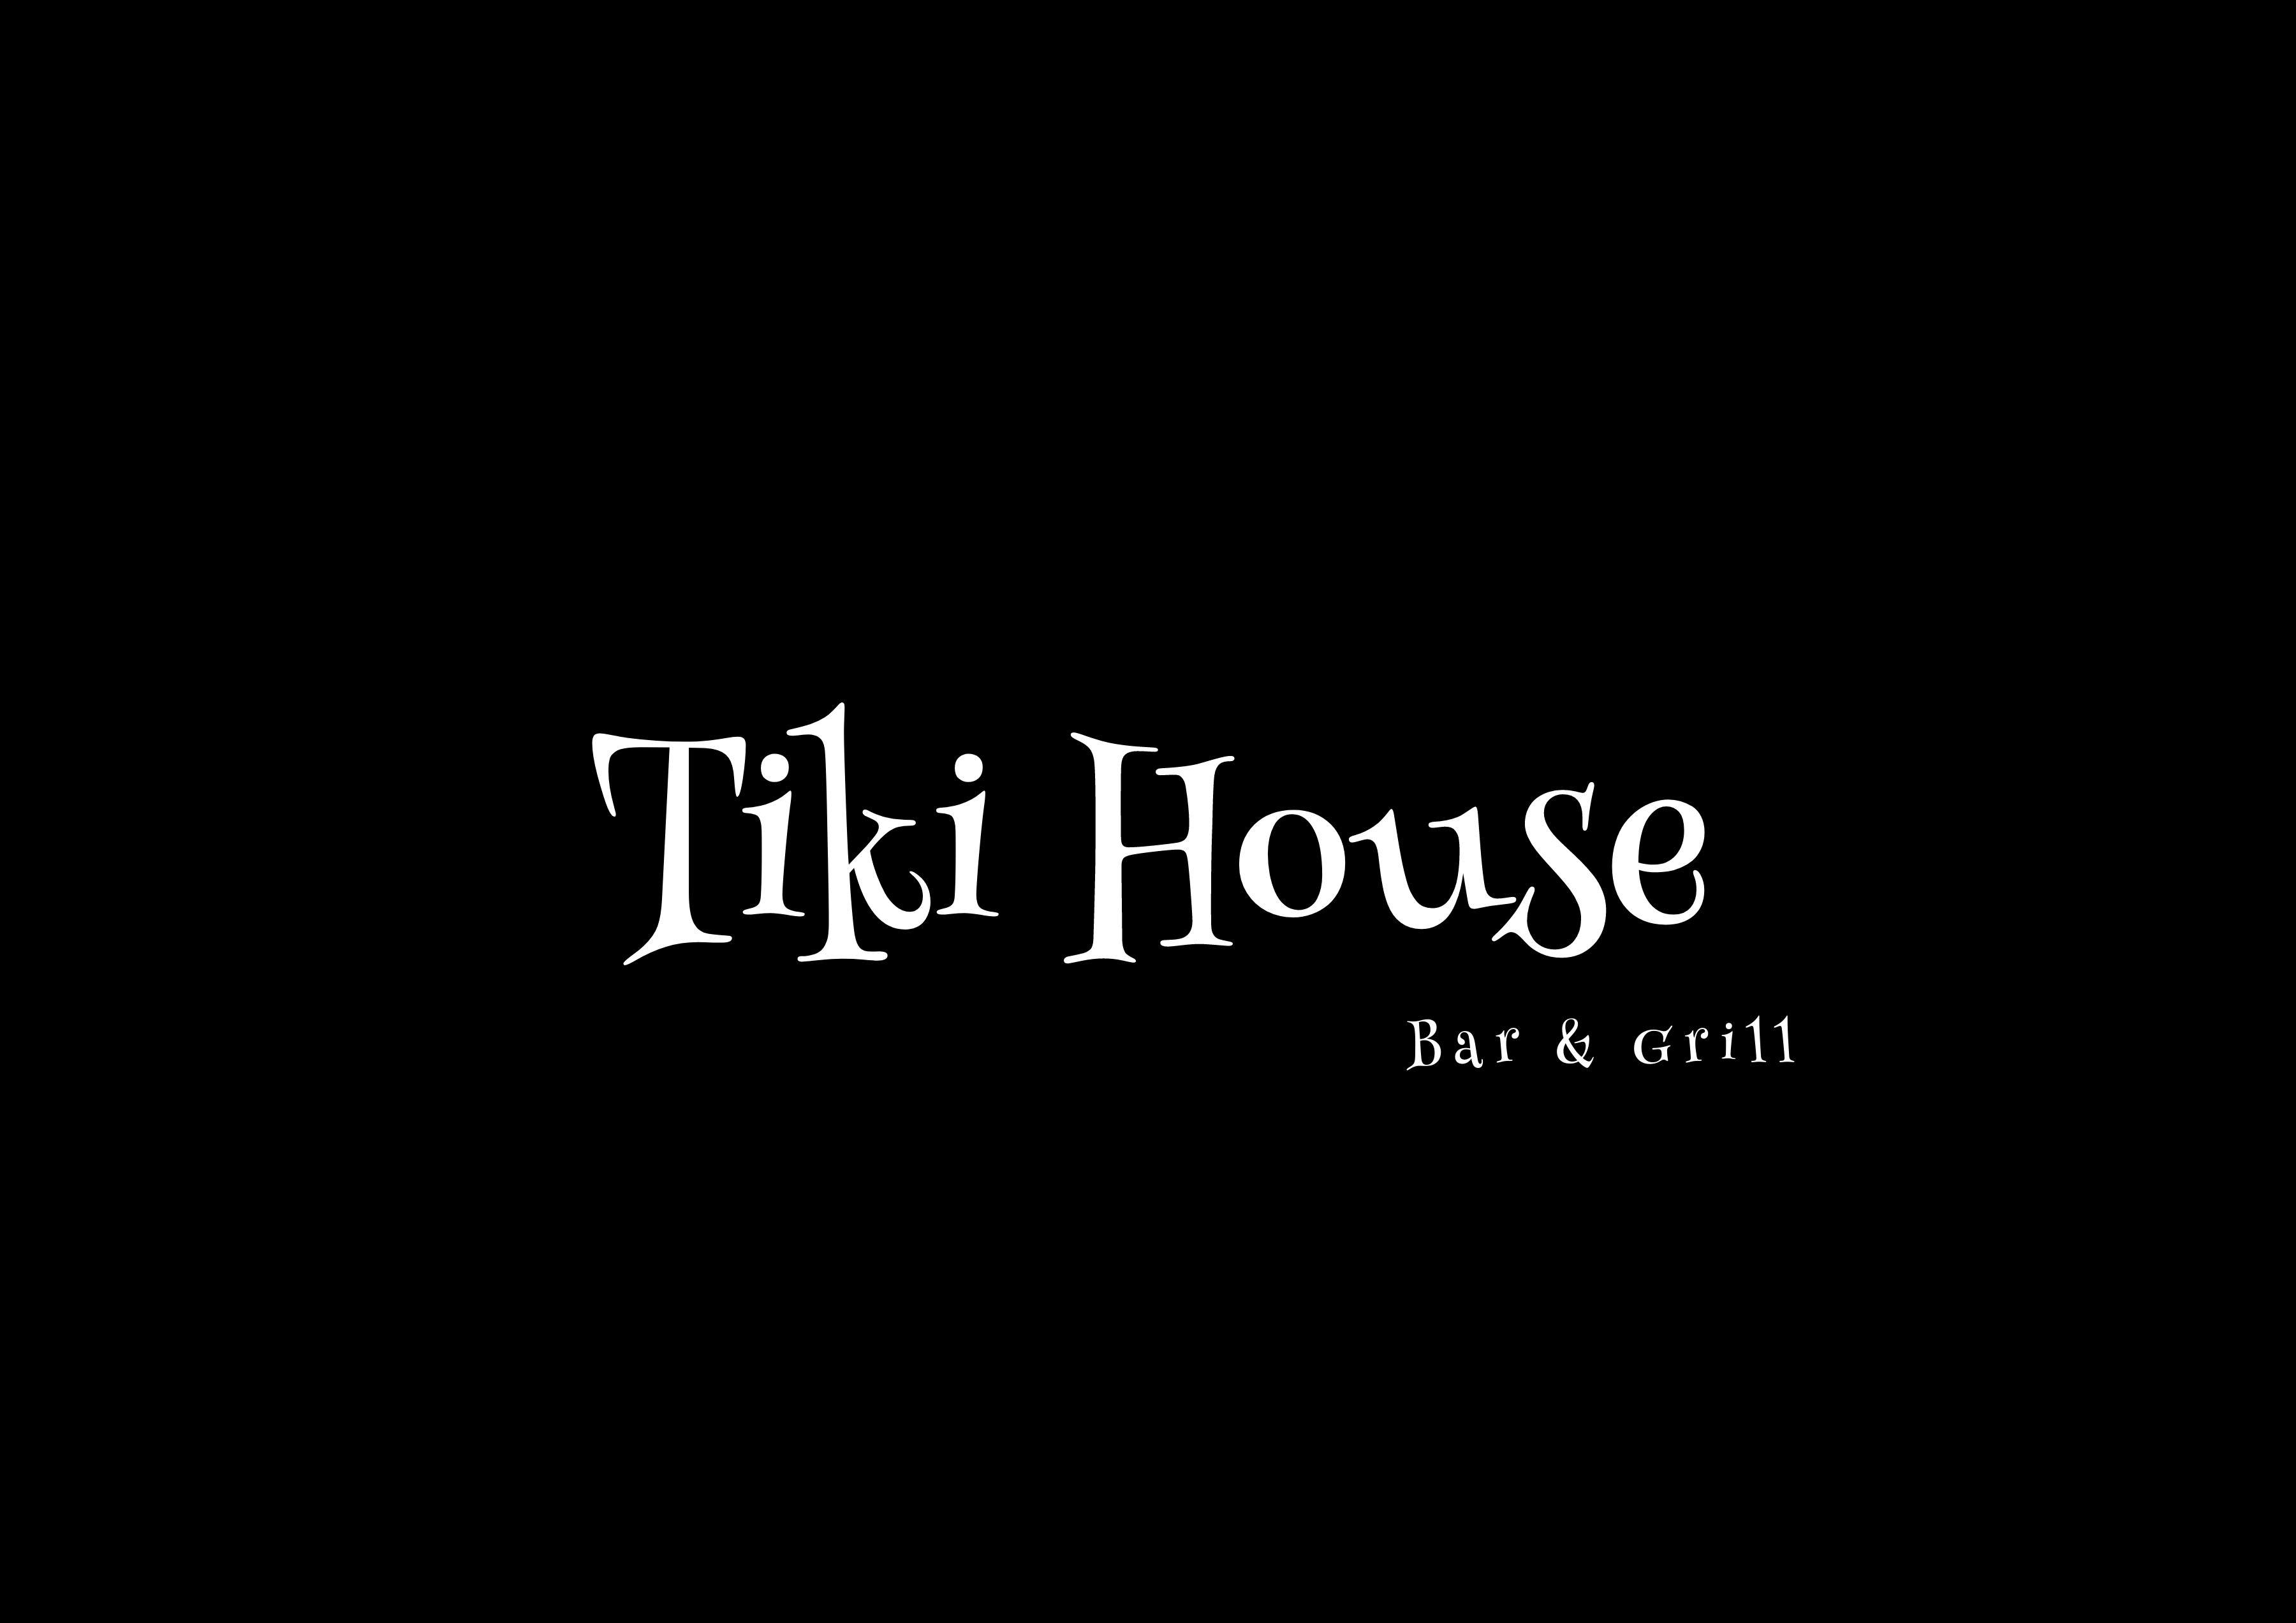 Tiki House Bar & Grill